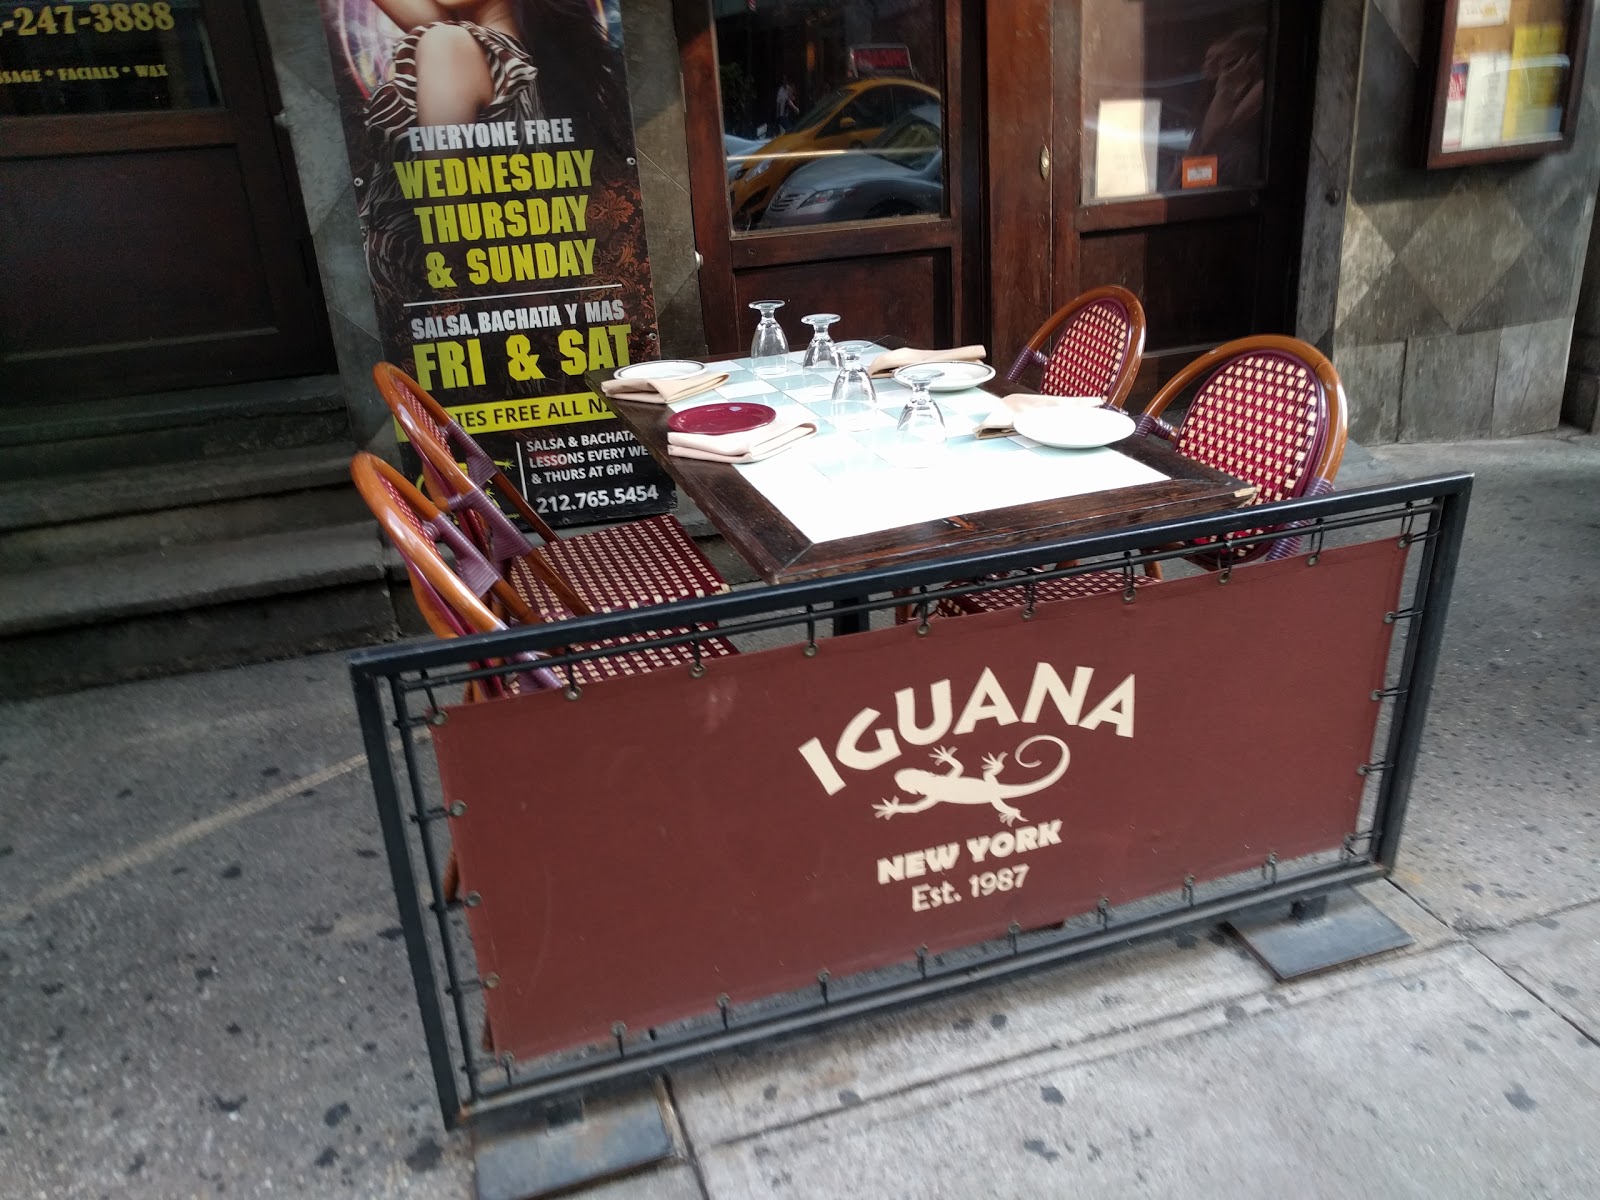 Photo of Iguana New York in New York City, New York, United States - 4 Picture of Restaurant, Food, Point of interest, Establishment, Bar, Night club